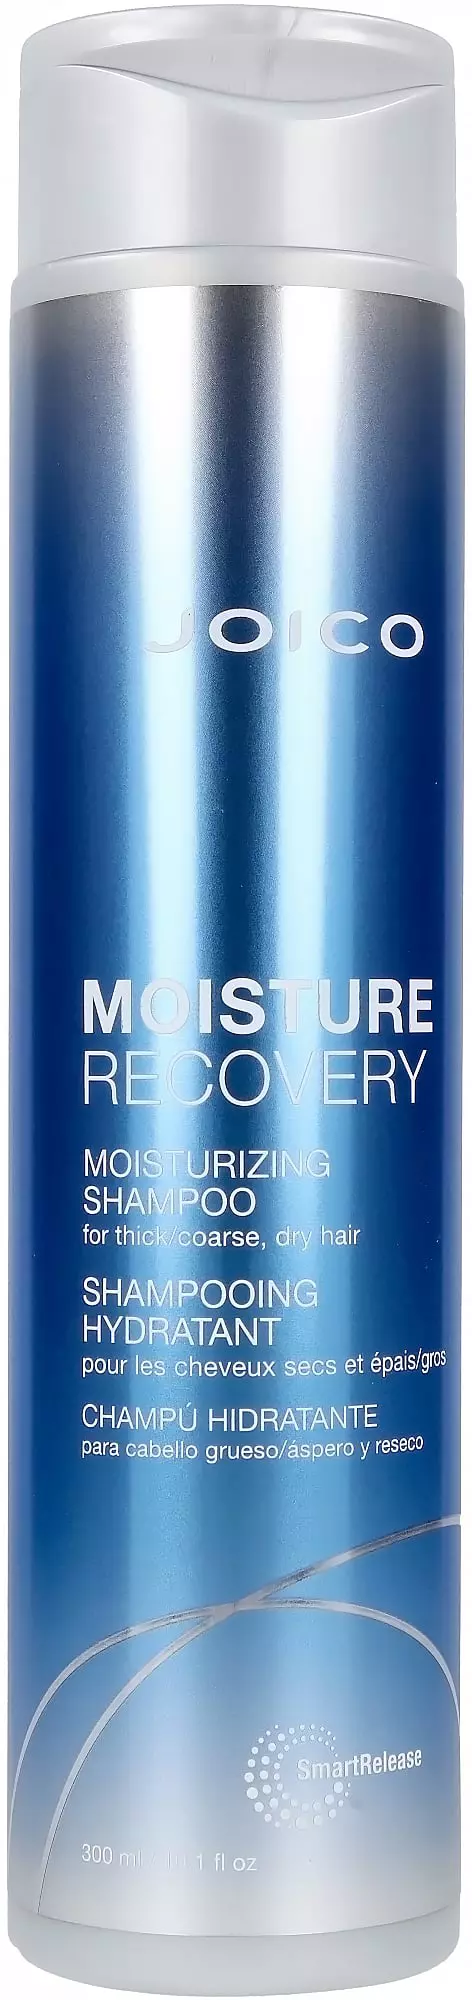 Joico Moisture Recovery Shampoo Ml